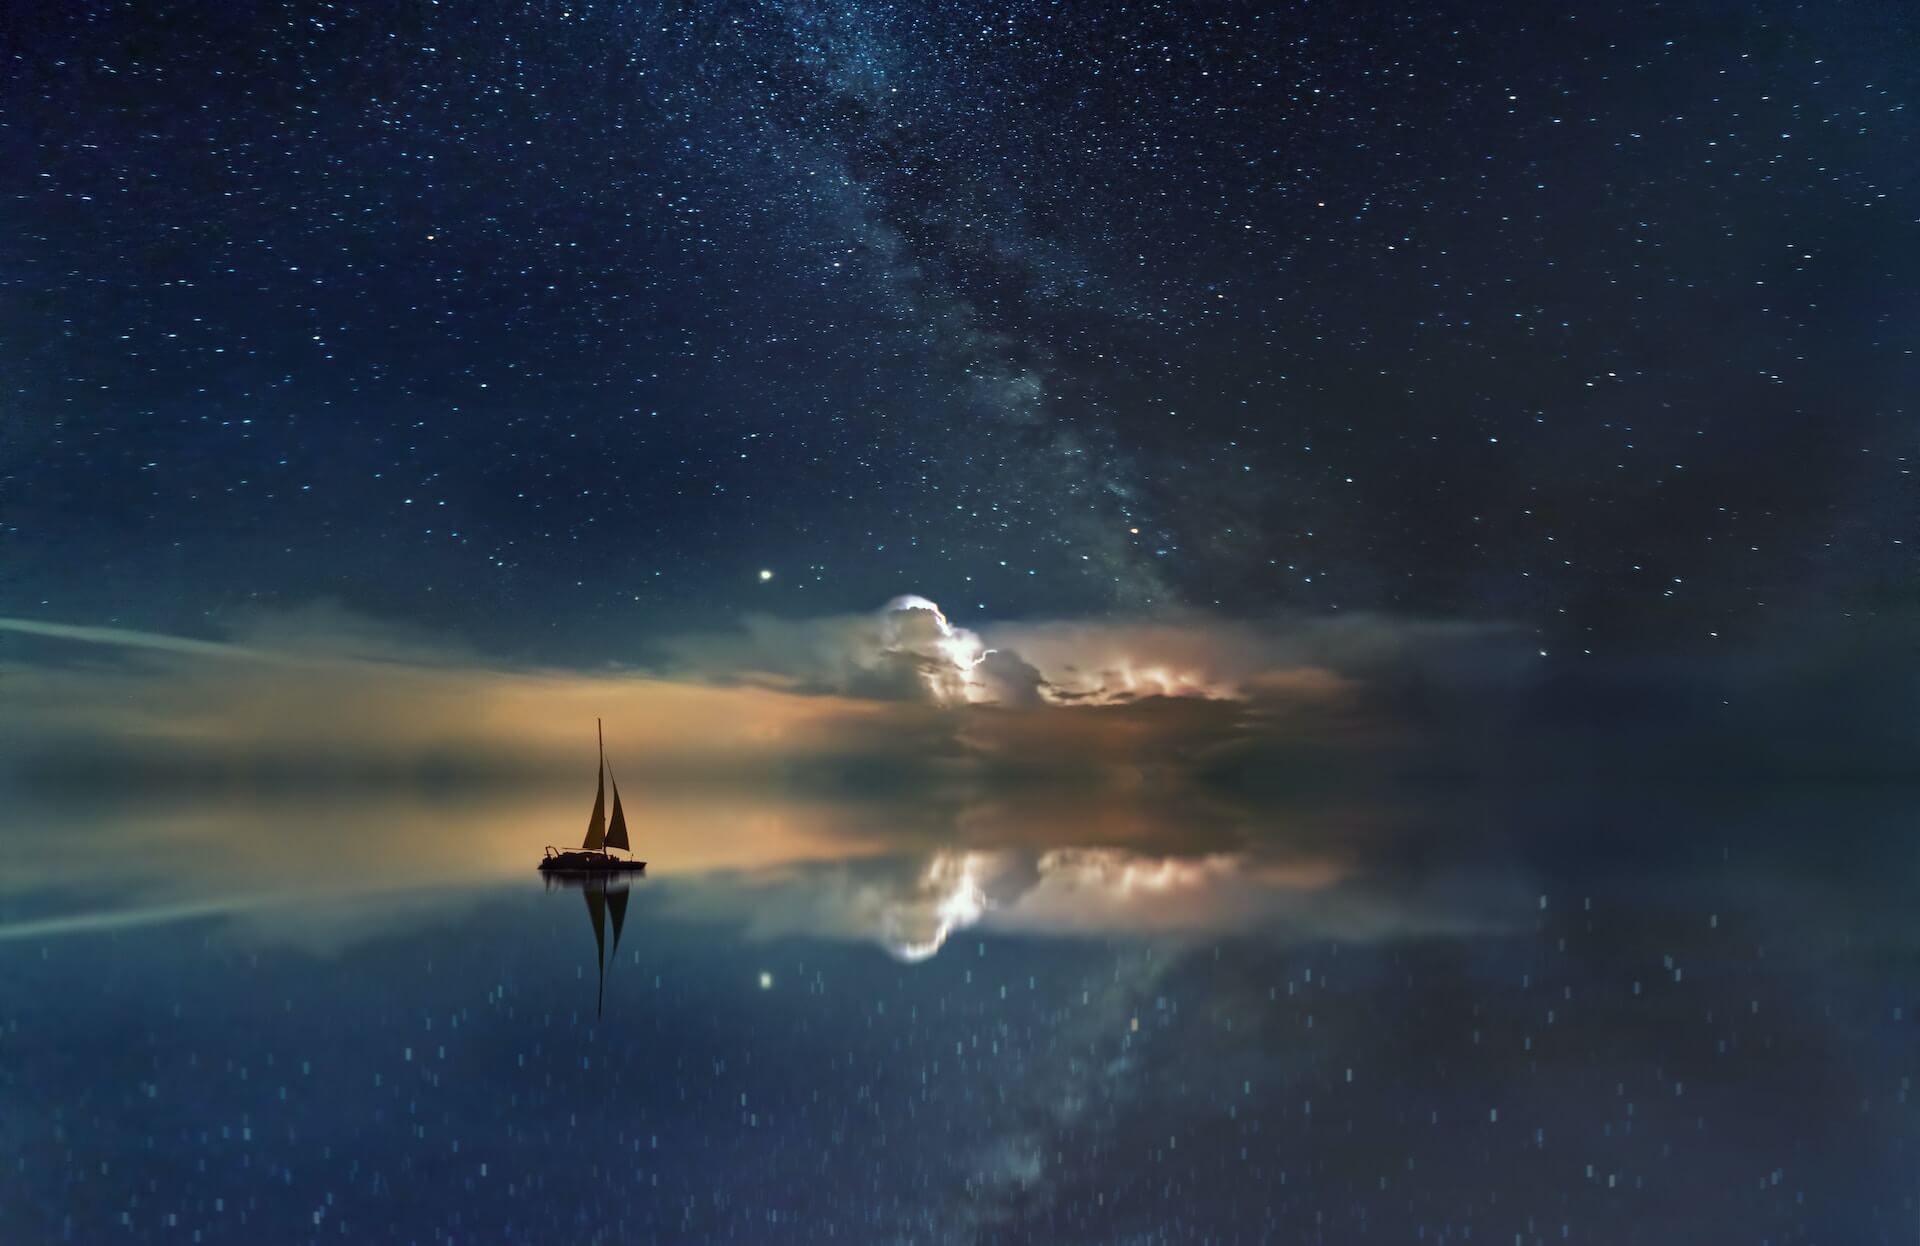 Ship sails through the sky in a fantasy world - AI game.